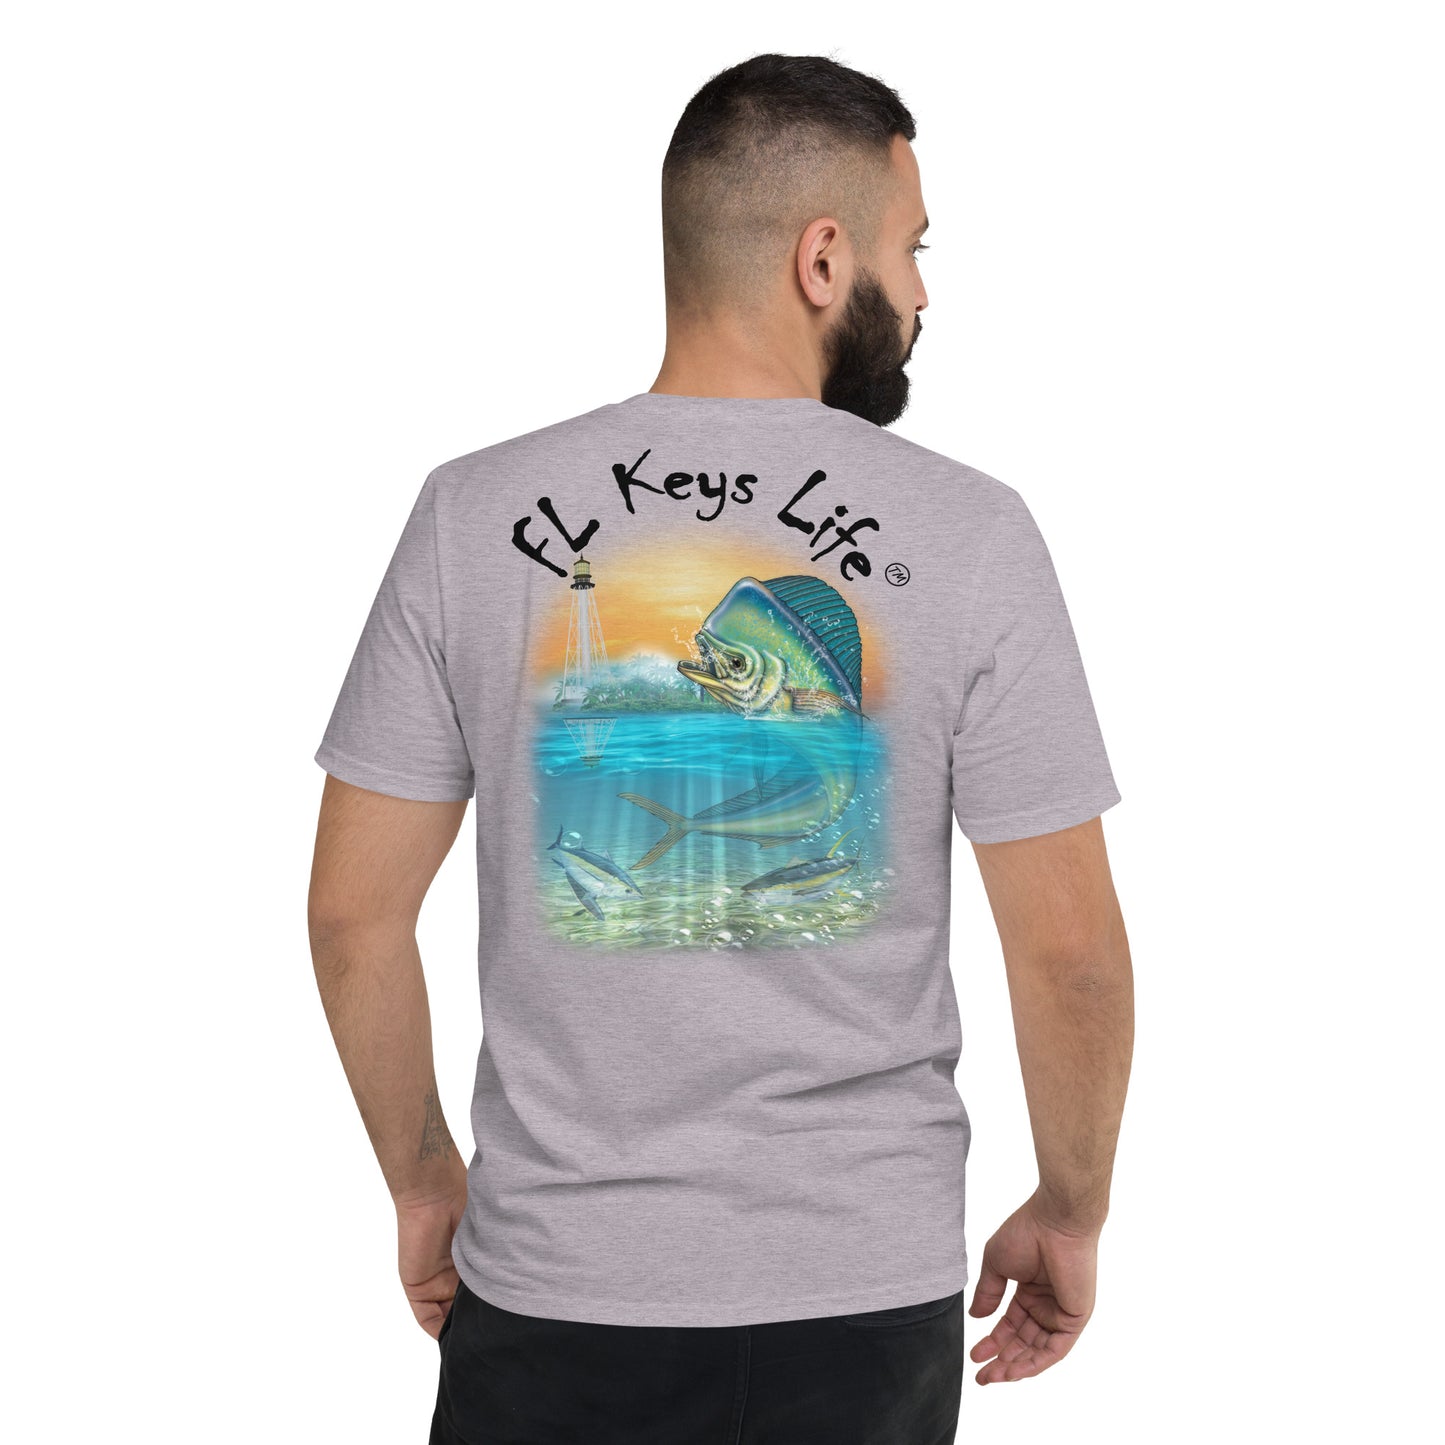 "Introducing the Florida Keys Life Short Sleeve Tee: Your Ticket to Island Paradise!"